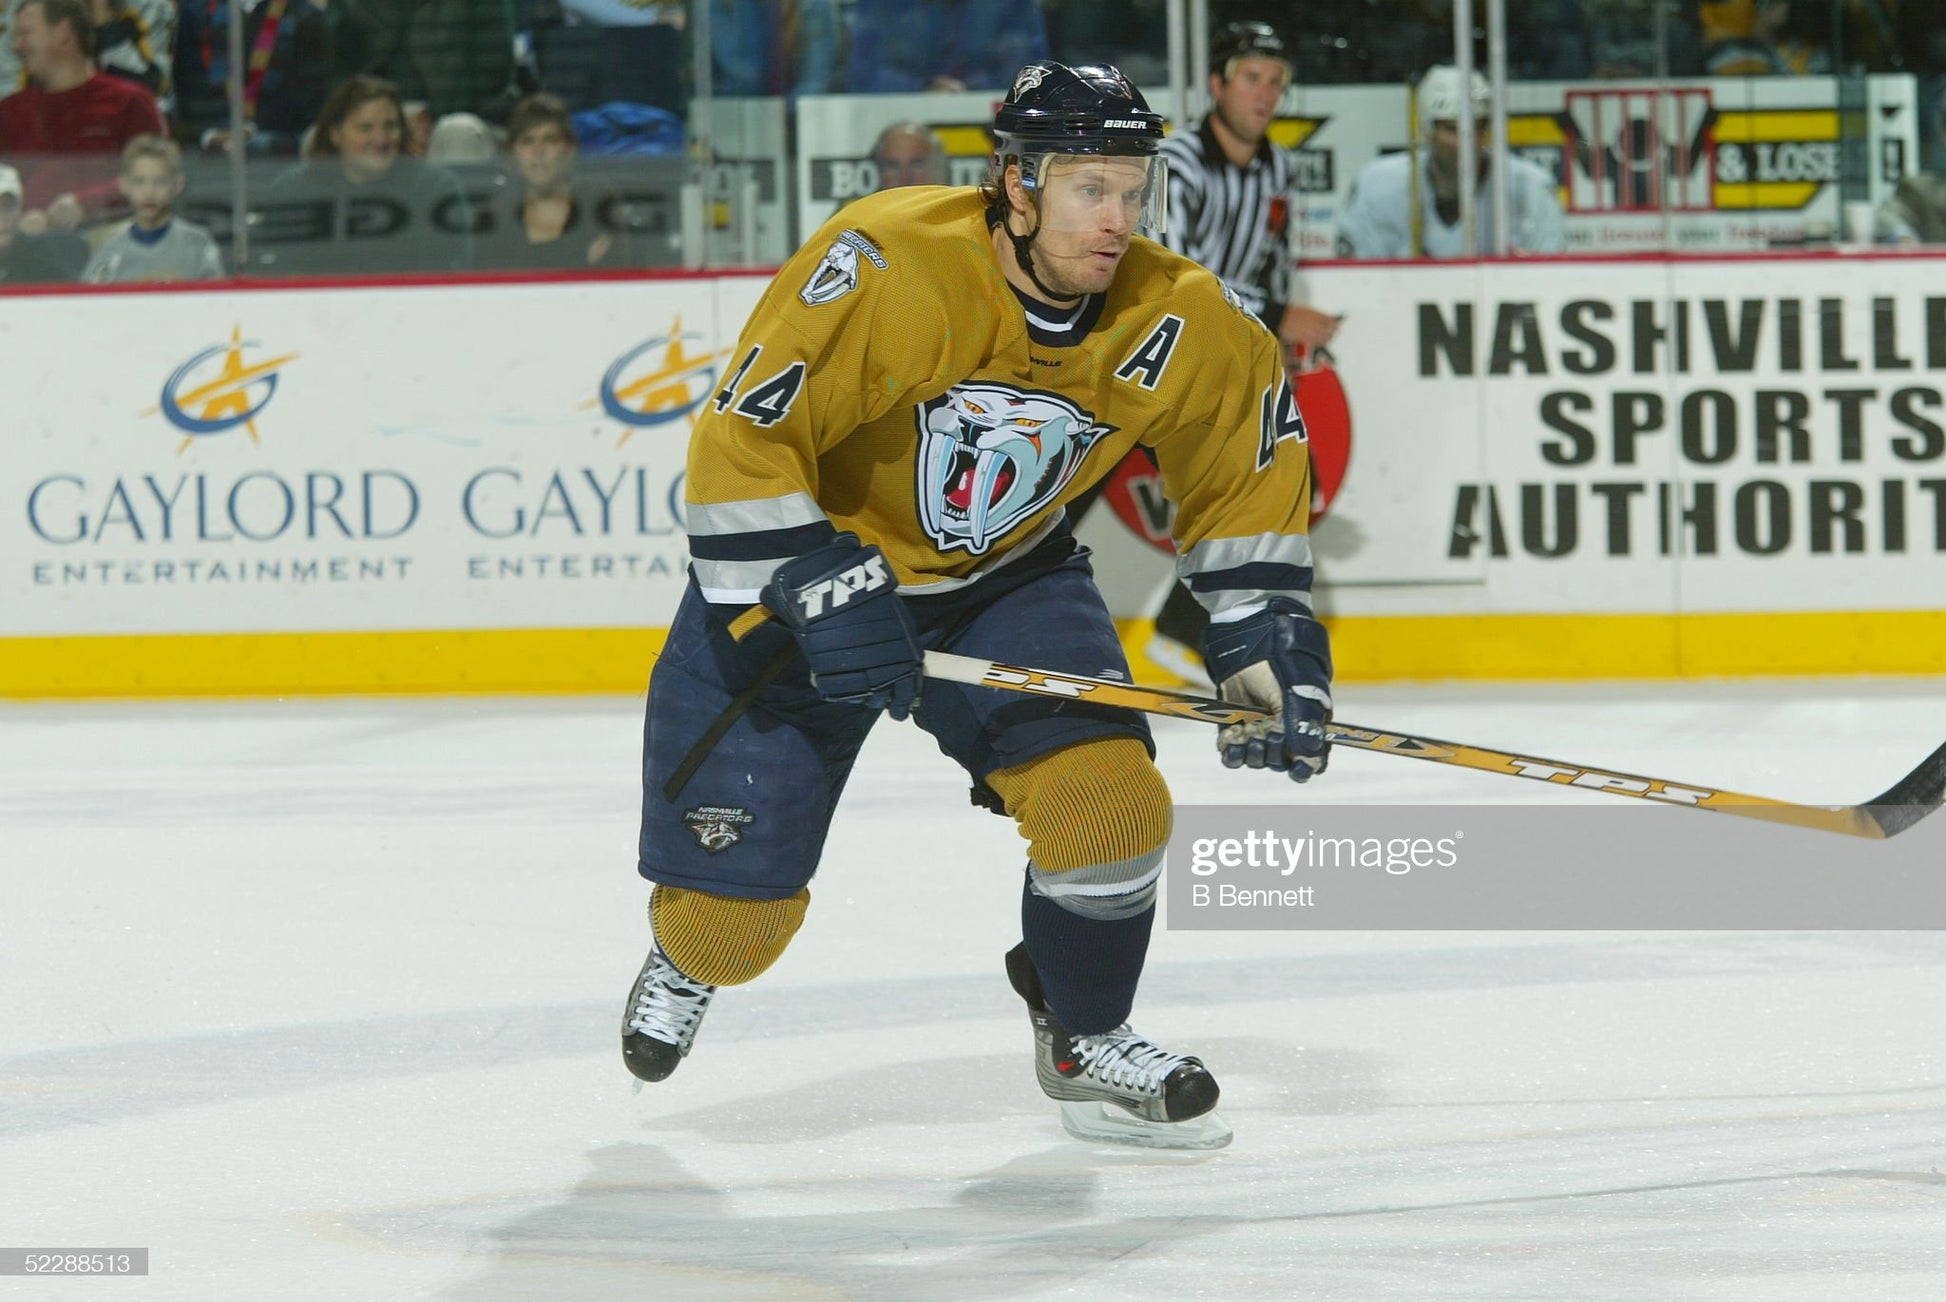 Nashville Predators 2003-04 Kimmo Timonen “Mustard Cat” Hockey